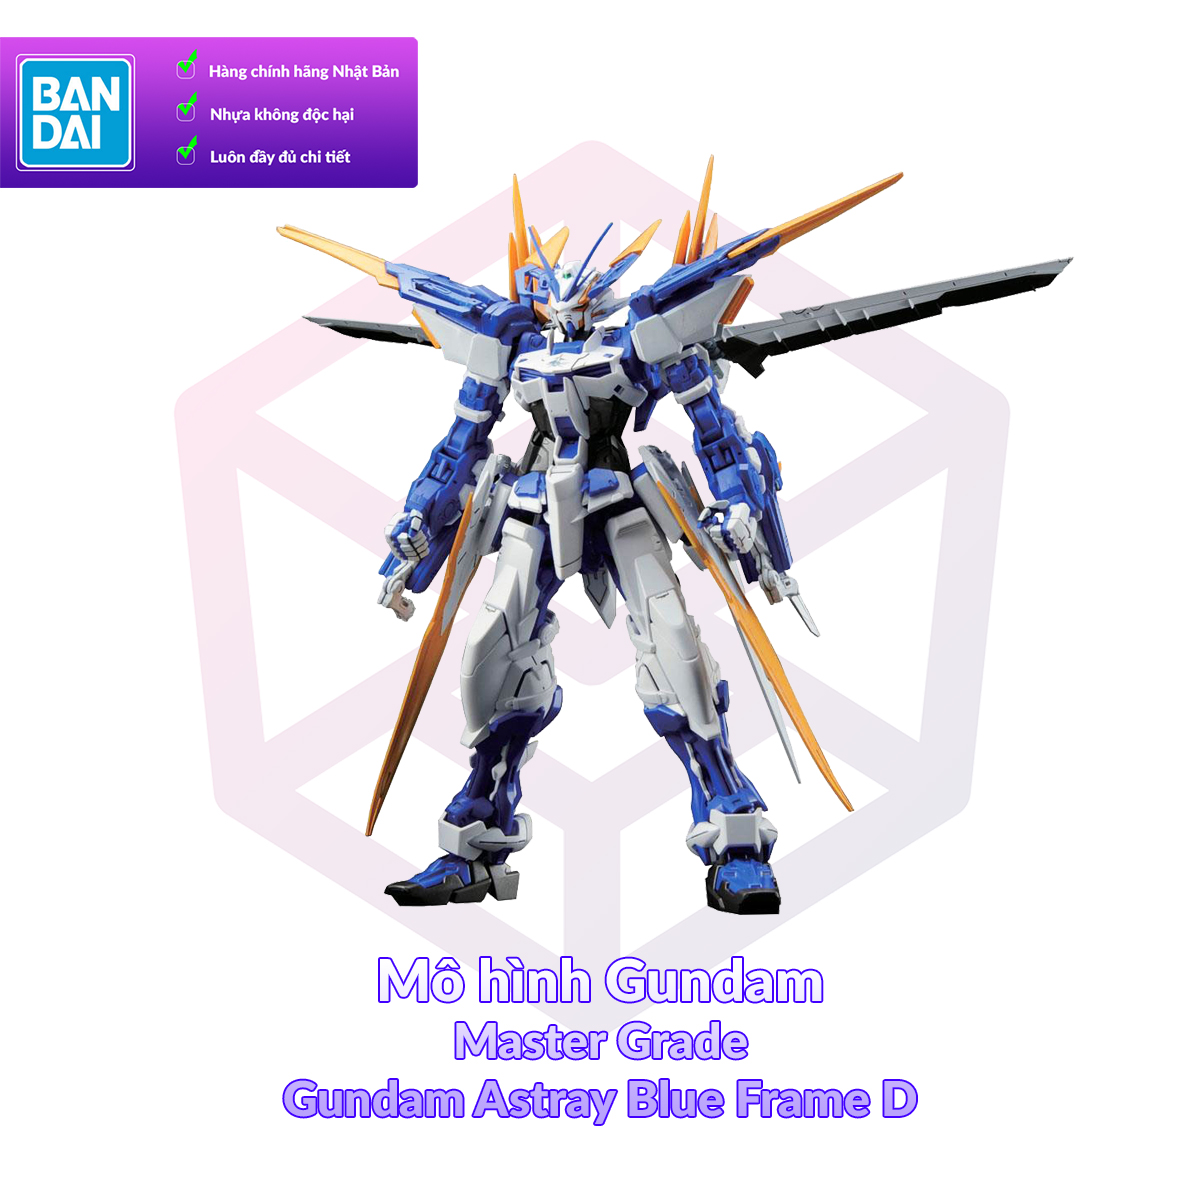 7-11 12 VOUCHER 8%Mô Hình Gundam Bandai MG Gundam Astray Blue Frame D 1